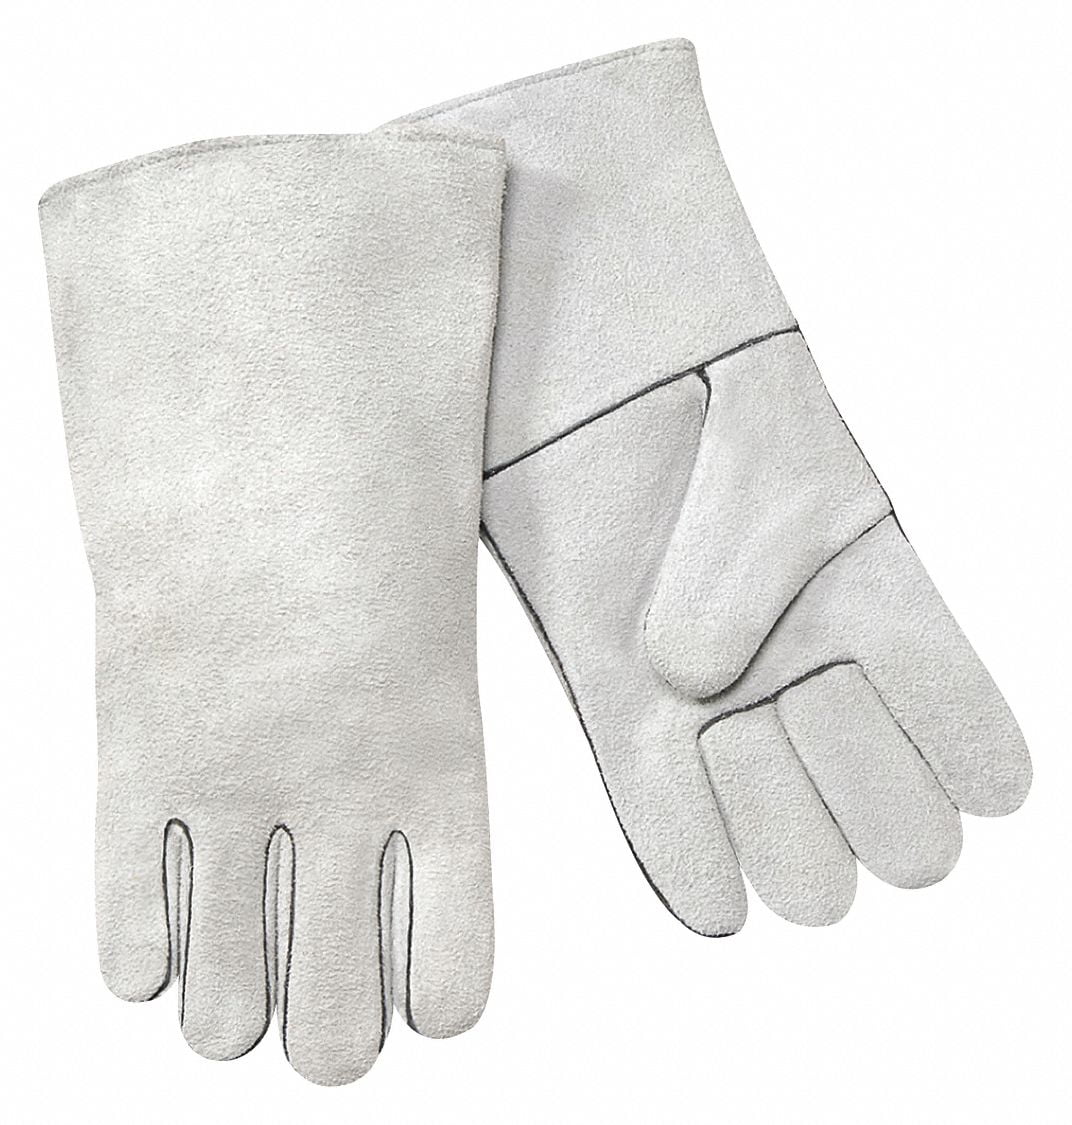 Miller Electric 263354 Goat Grain Leather TIG/Multi-Task Welding Gloves; Large